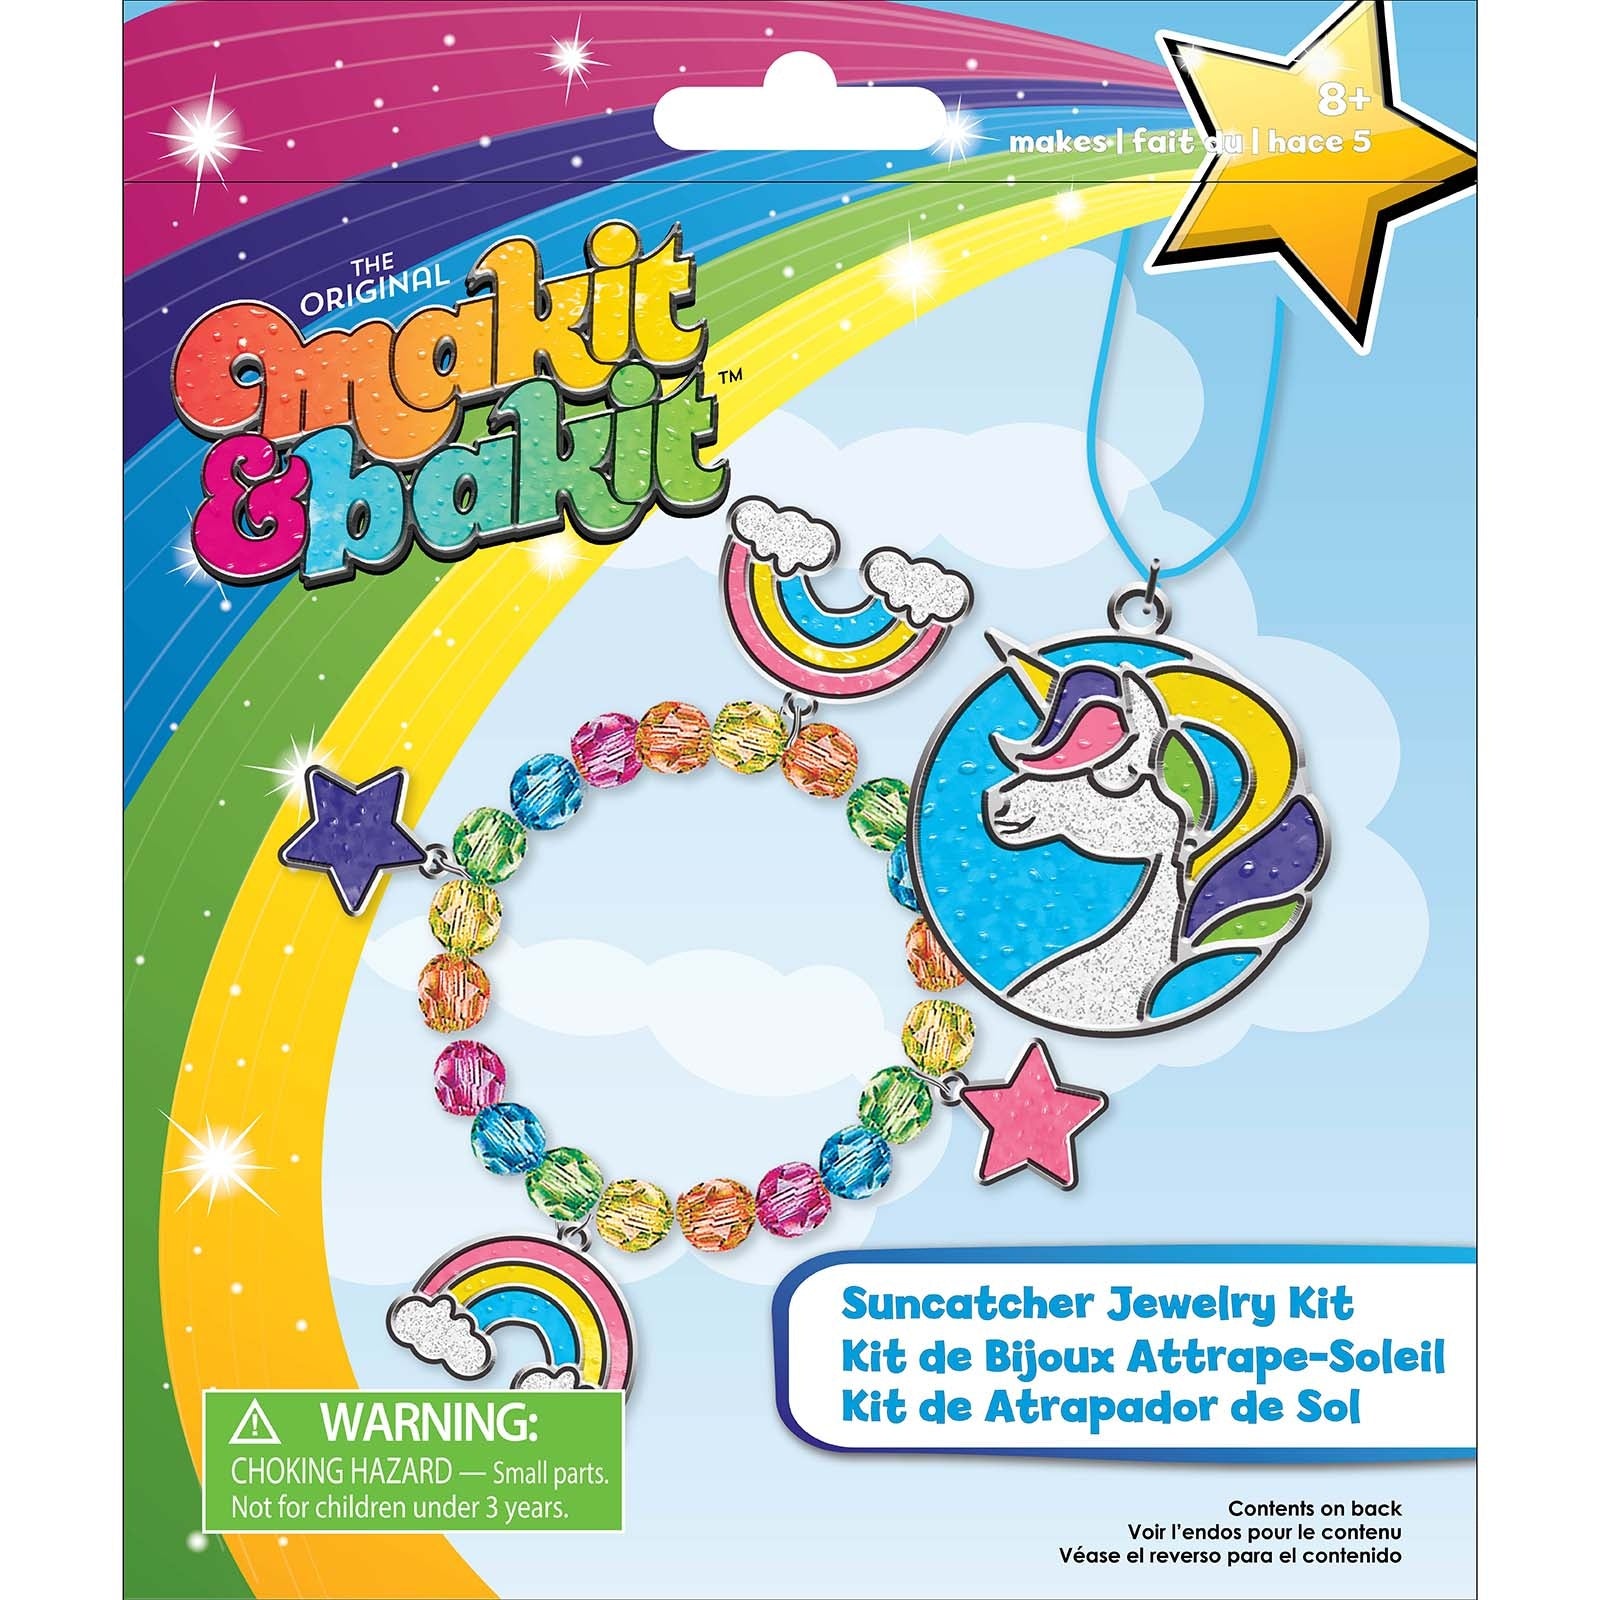 5-Bracelet Rainbow DIY Kit